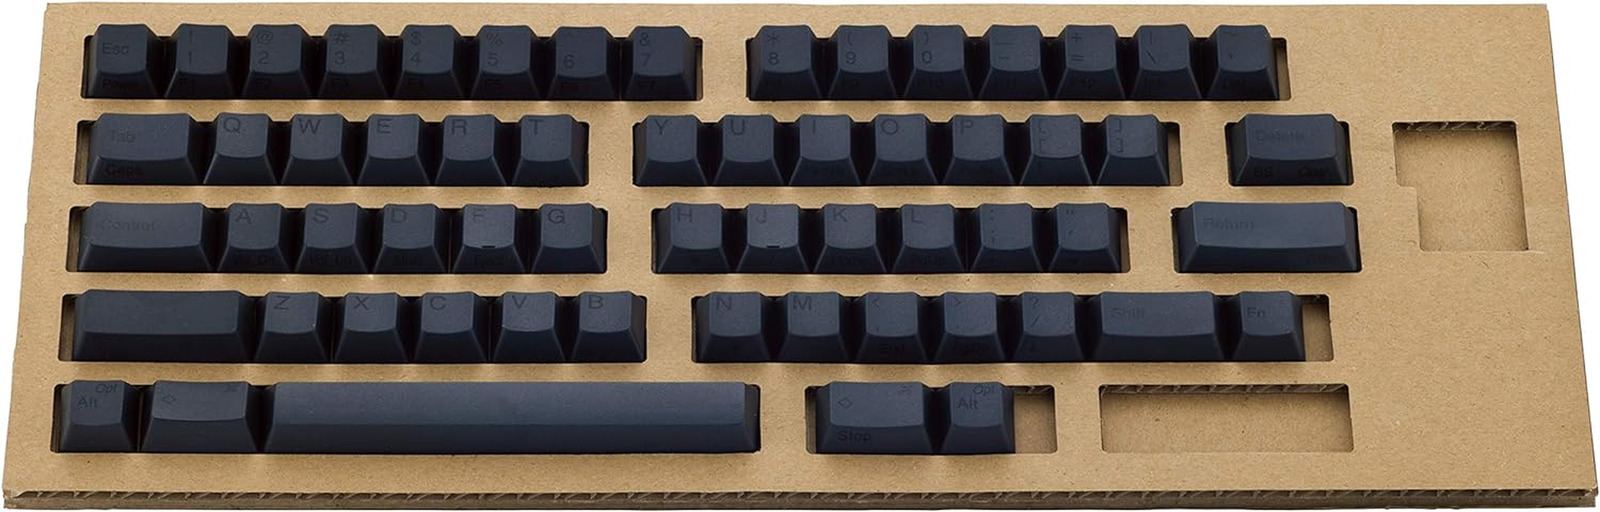 PFU Key Top Set PD-KB400KTB Sumi Black for  English Keyboard Layout